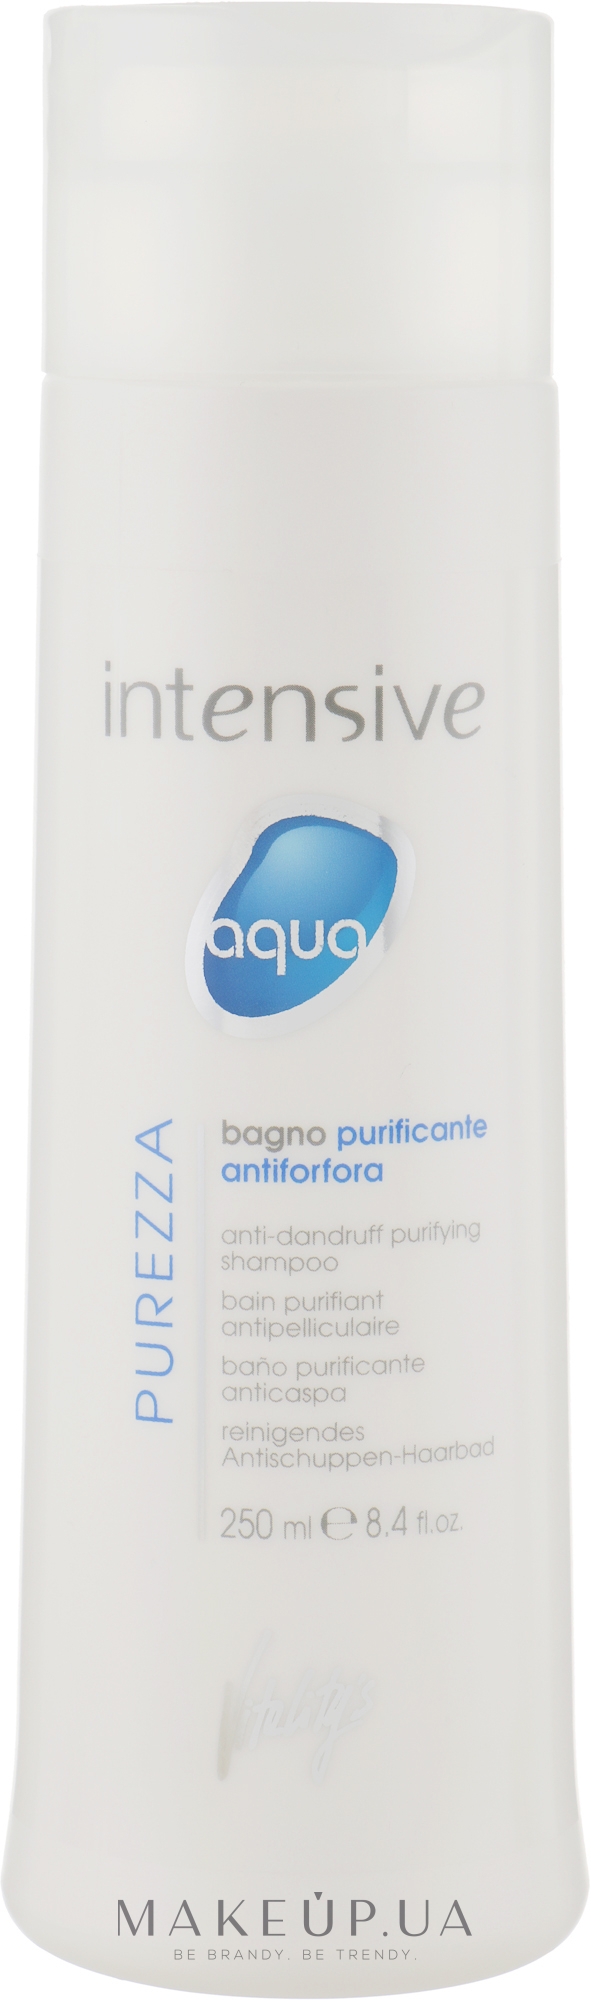 Очищающий шампунь против перхоти - Vitality's Intensive Aqua Purify Anti-Dandruff Purifying Shampoo — фото 250ml